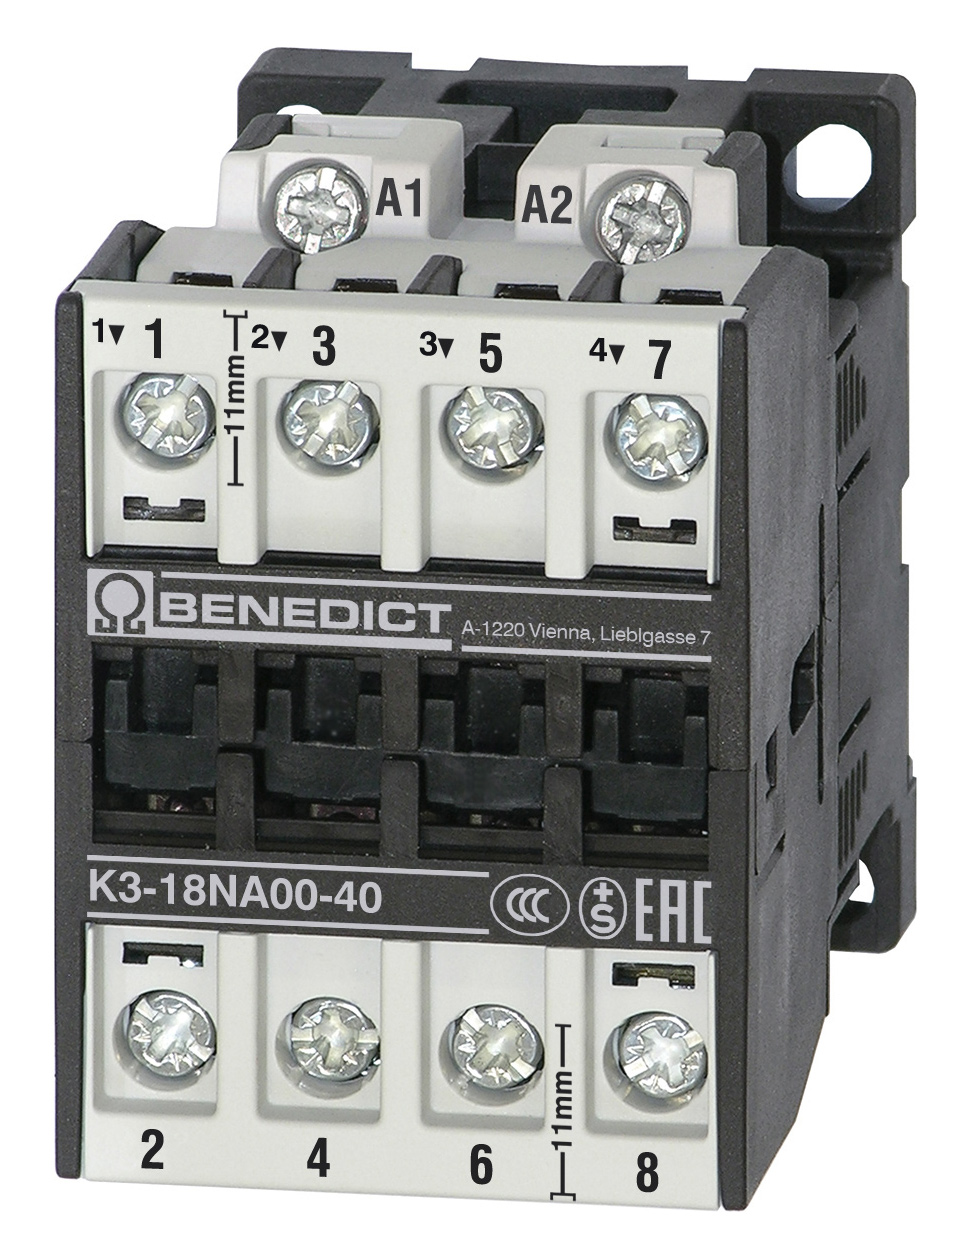  K3-18NA00-40 42 BENEDICT